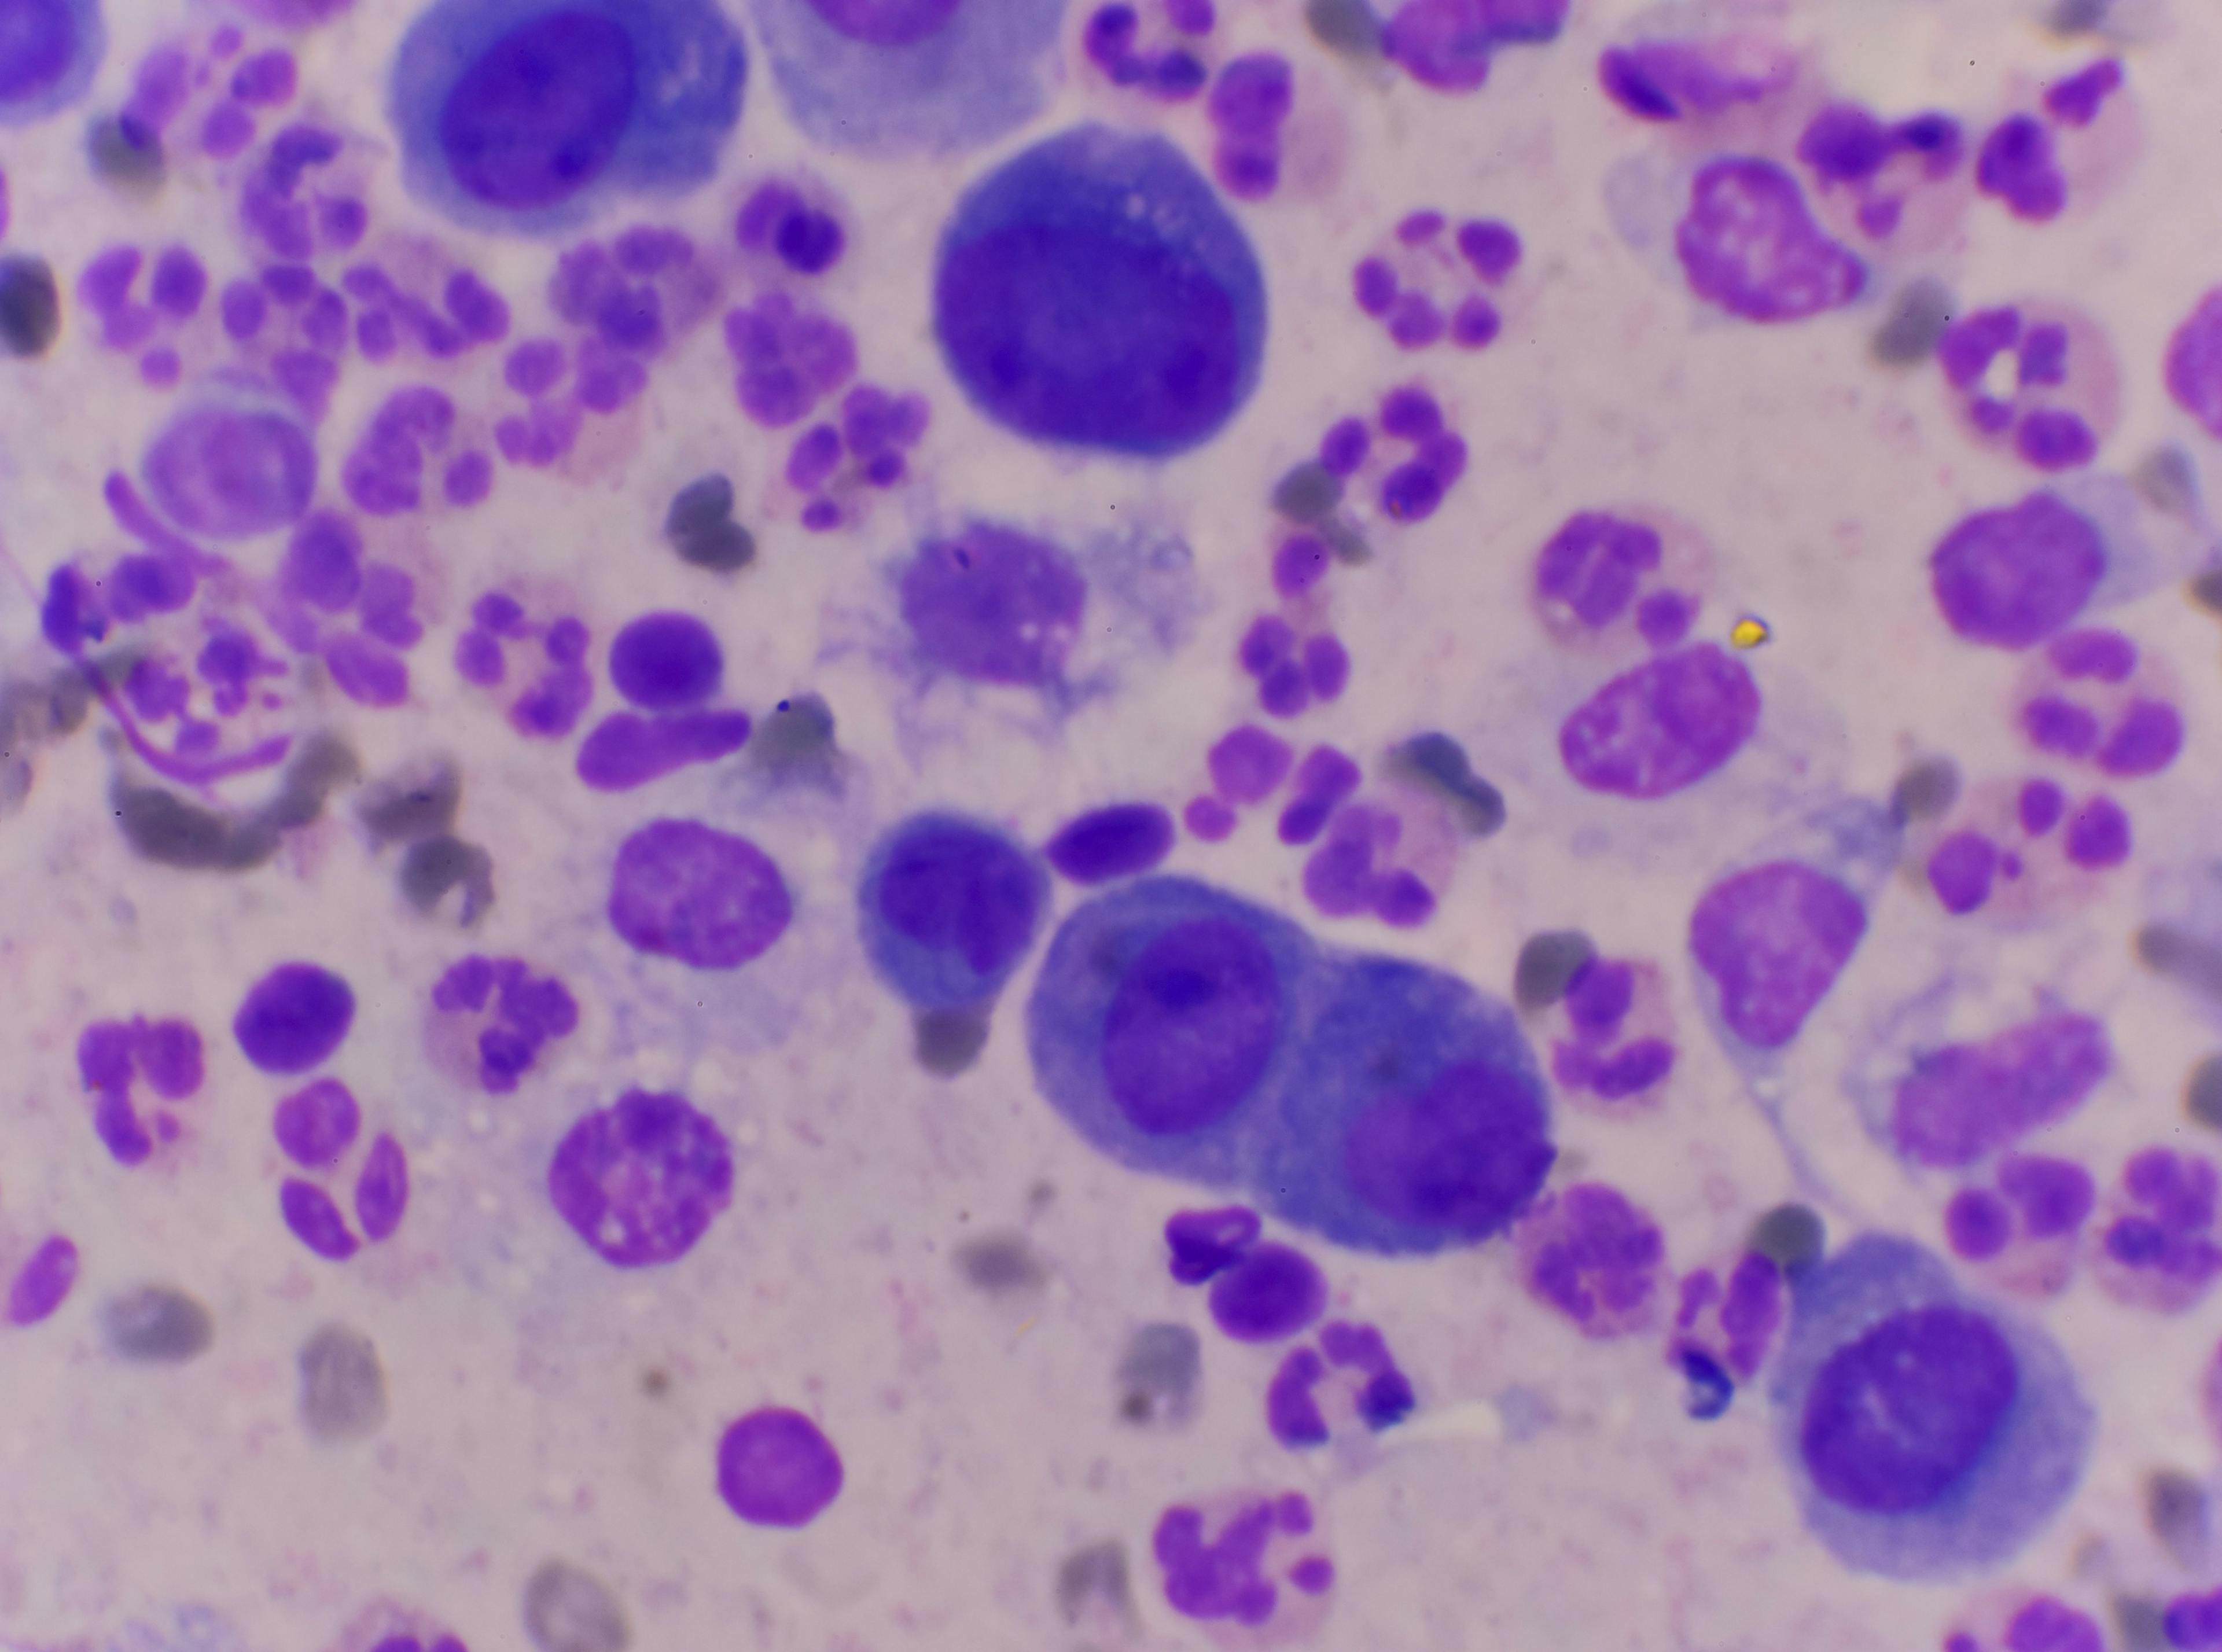 Mesothelial cells in body fluid sample. Image credit: toeytoey | stock.adobe.com